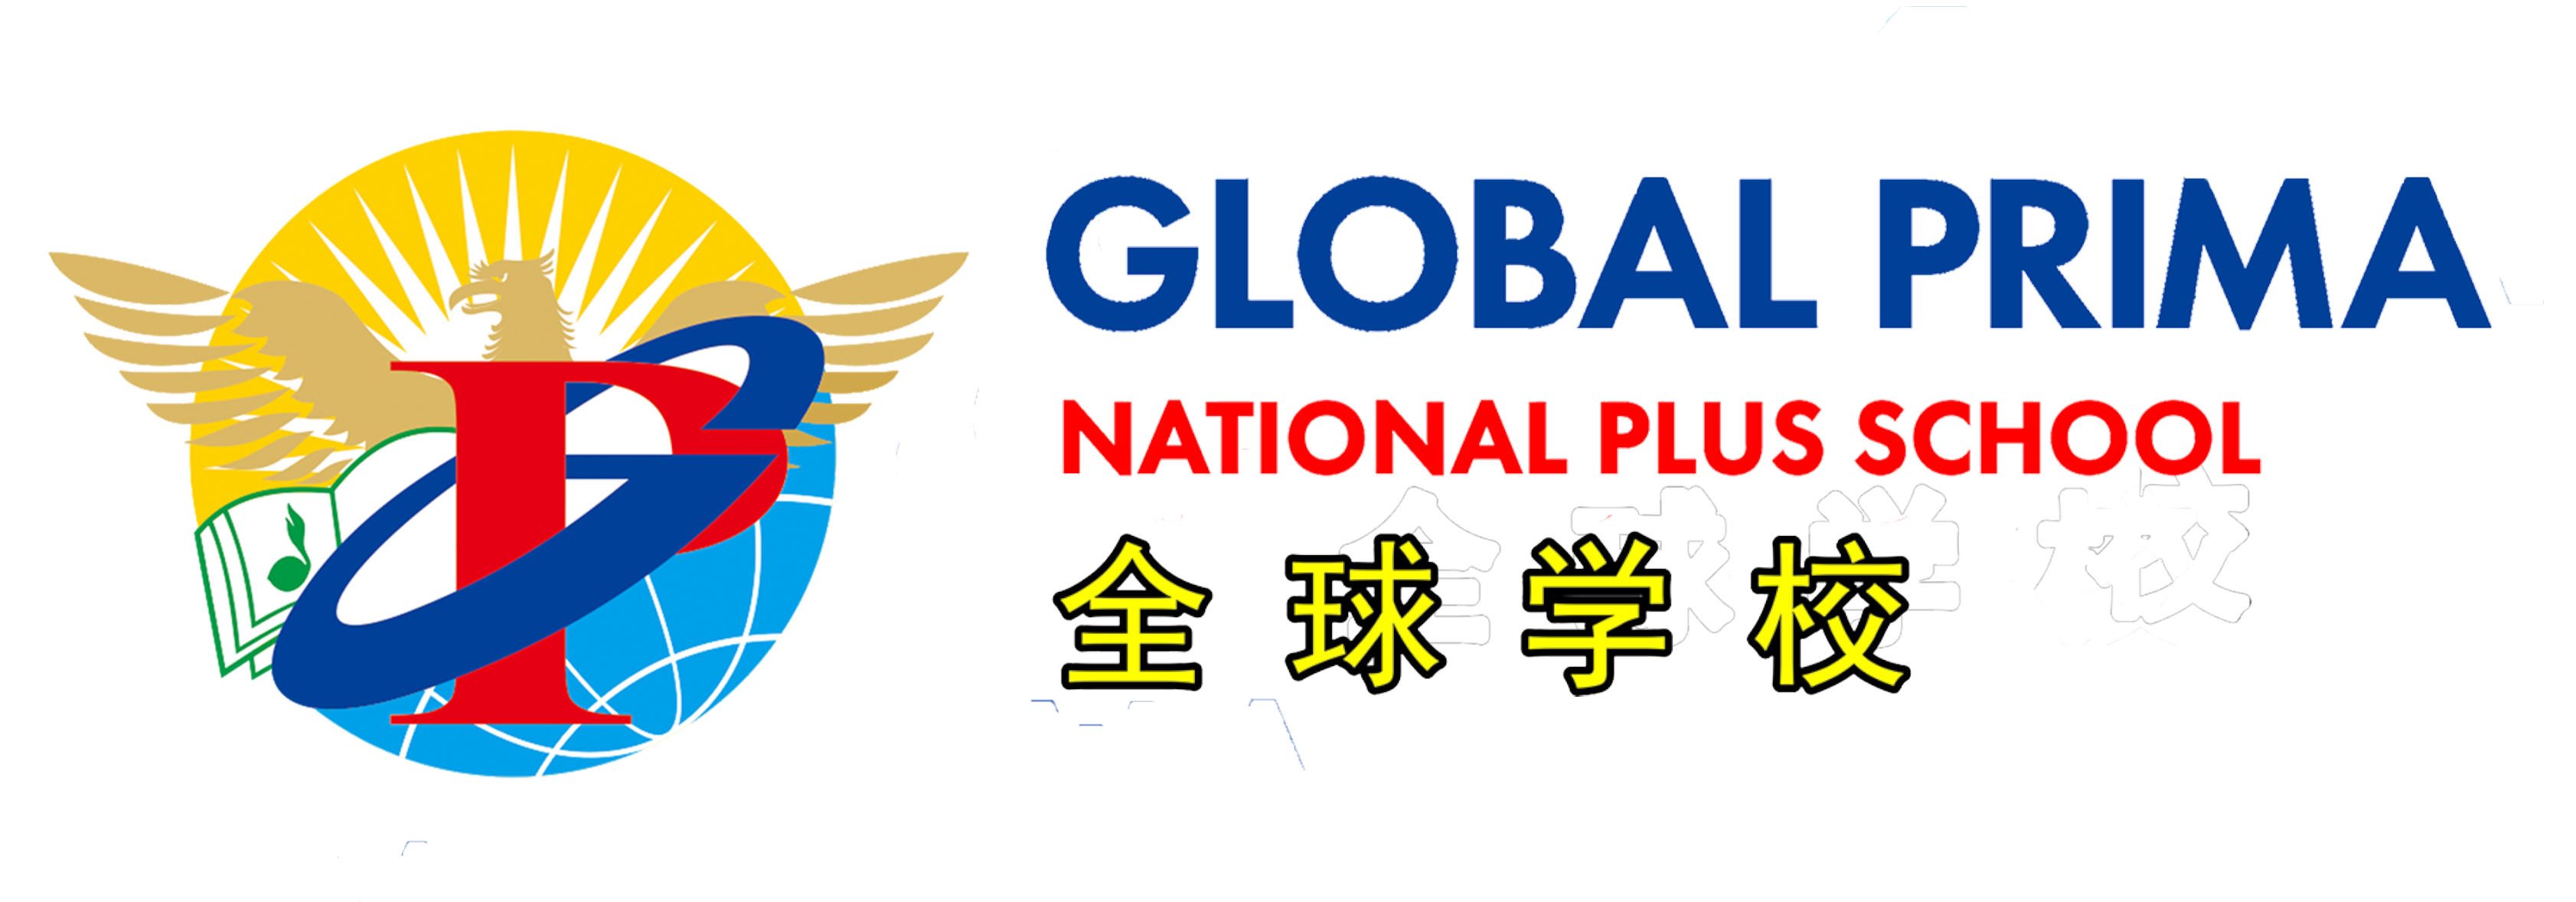 Global Prima National Plus School